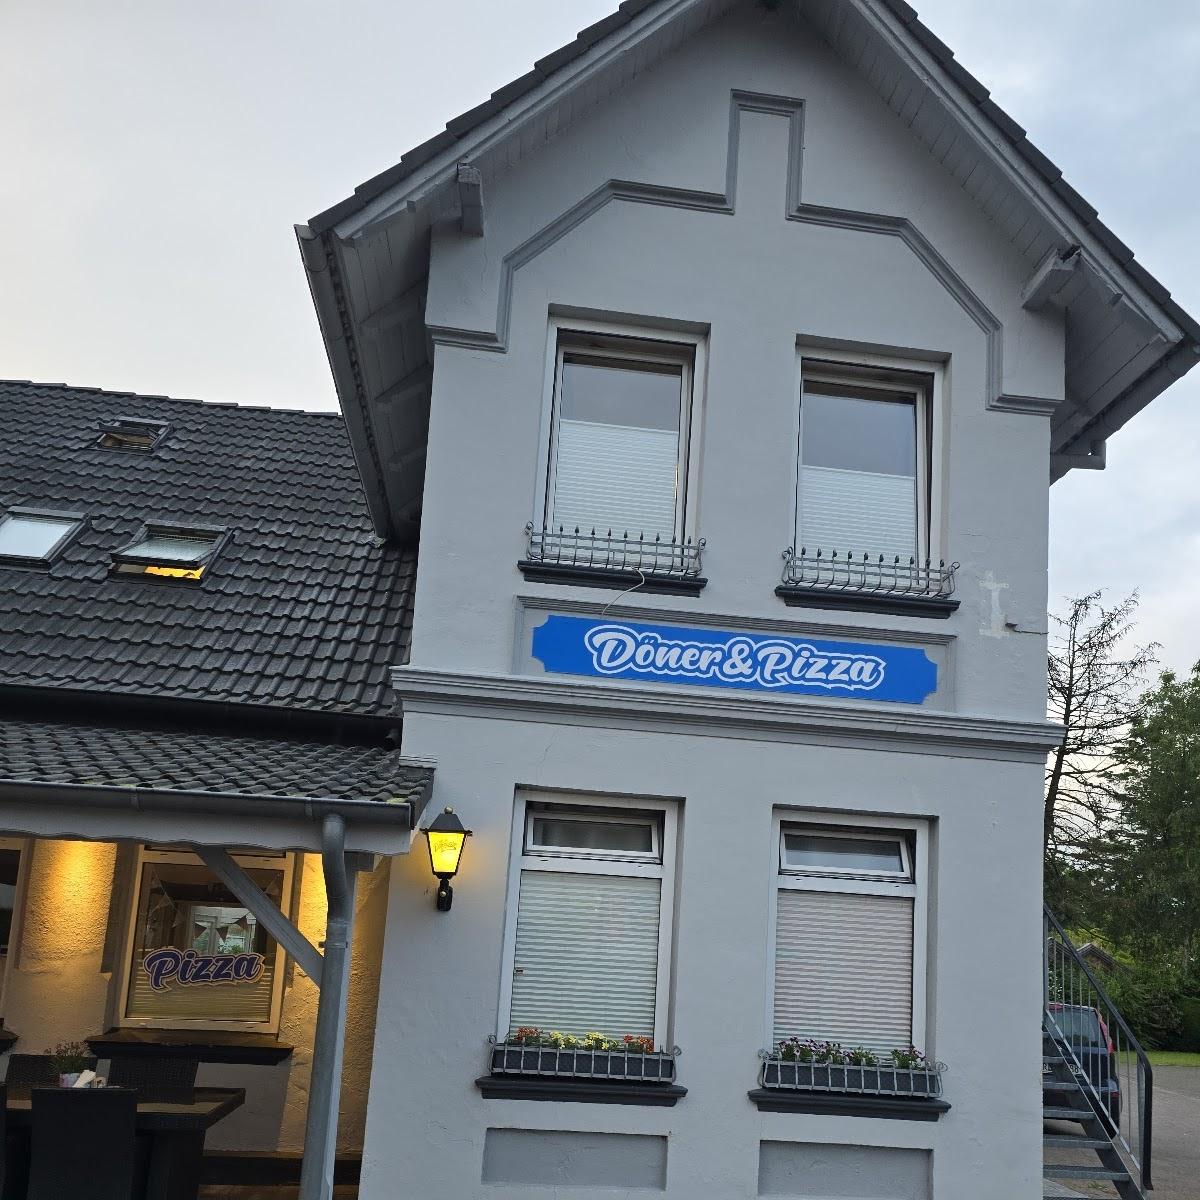 Restaurant "Döner Pizza Haus" in Hennstedt